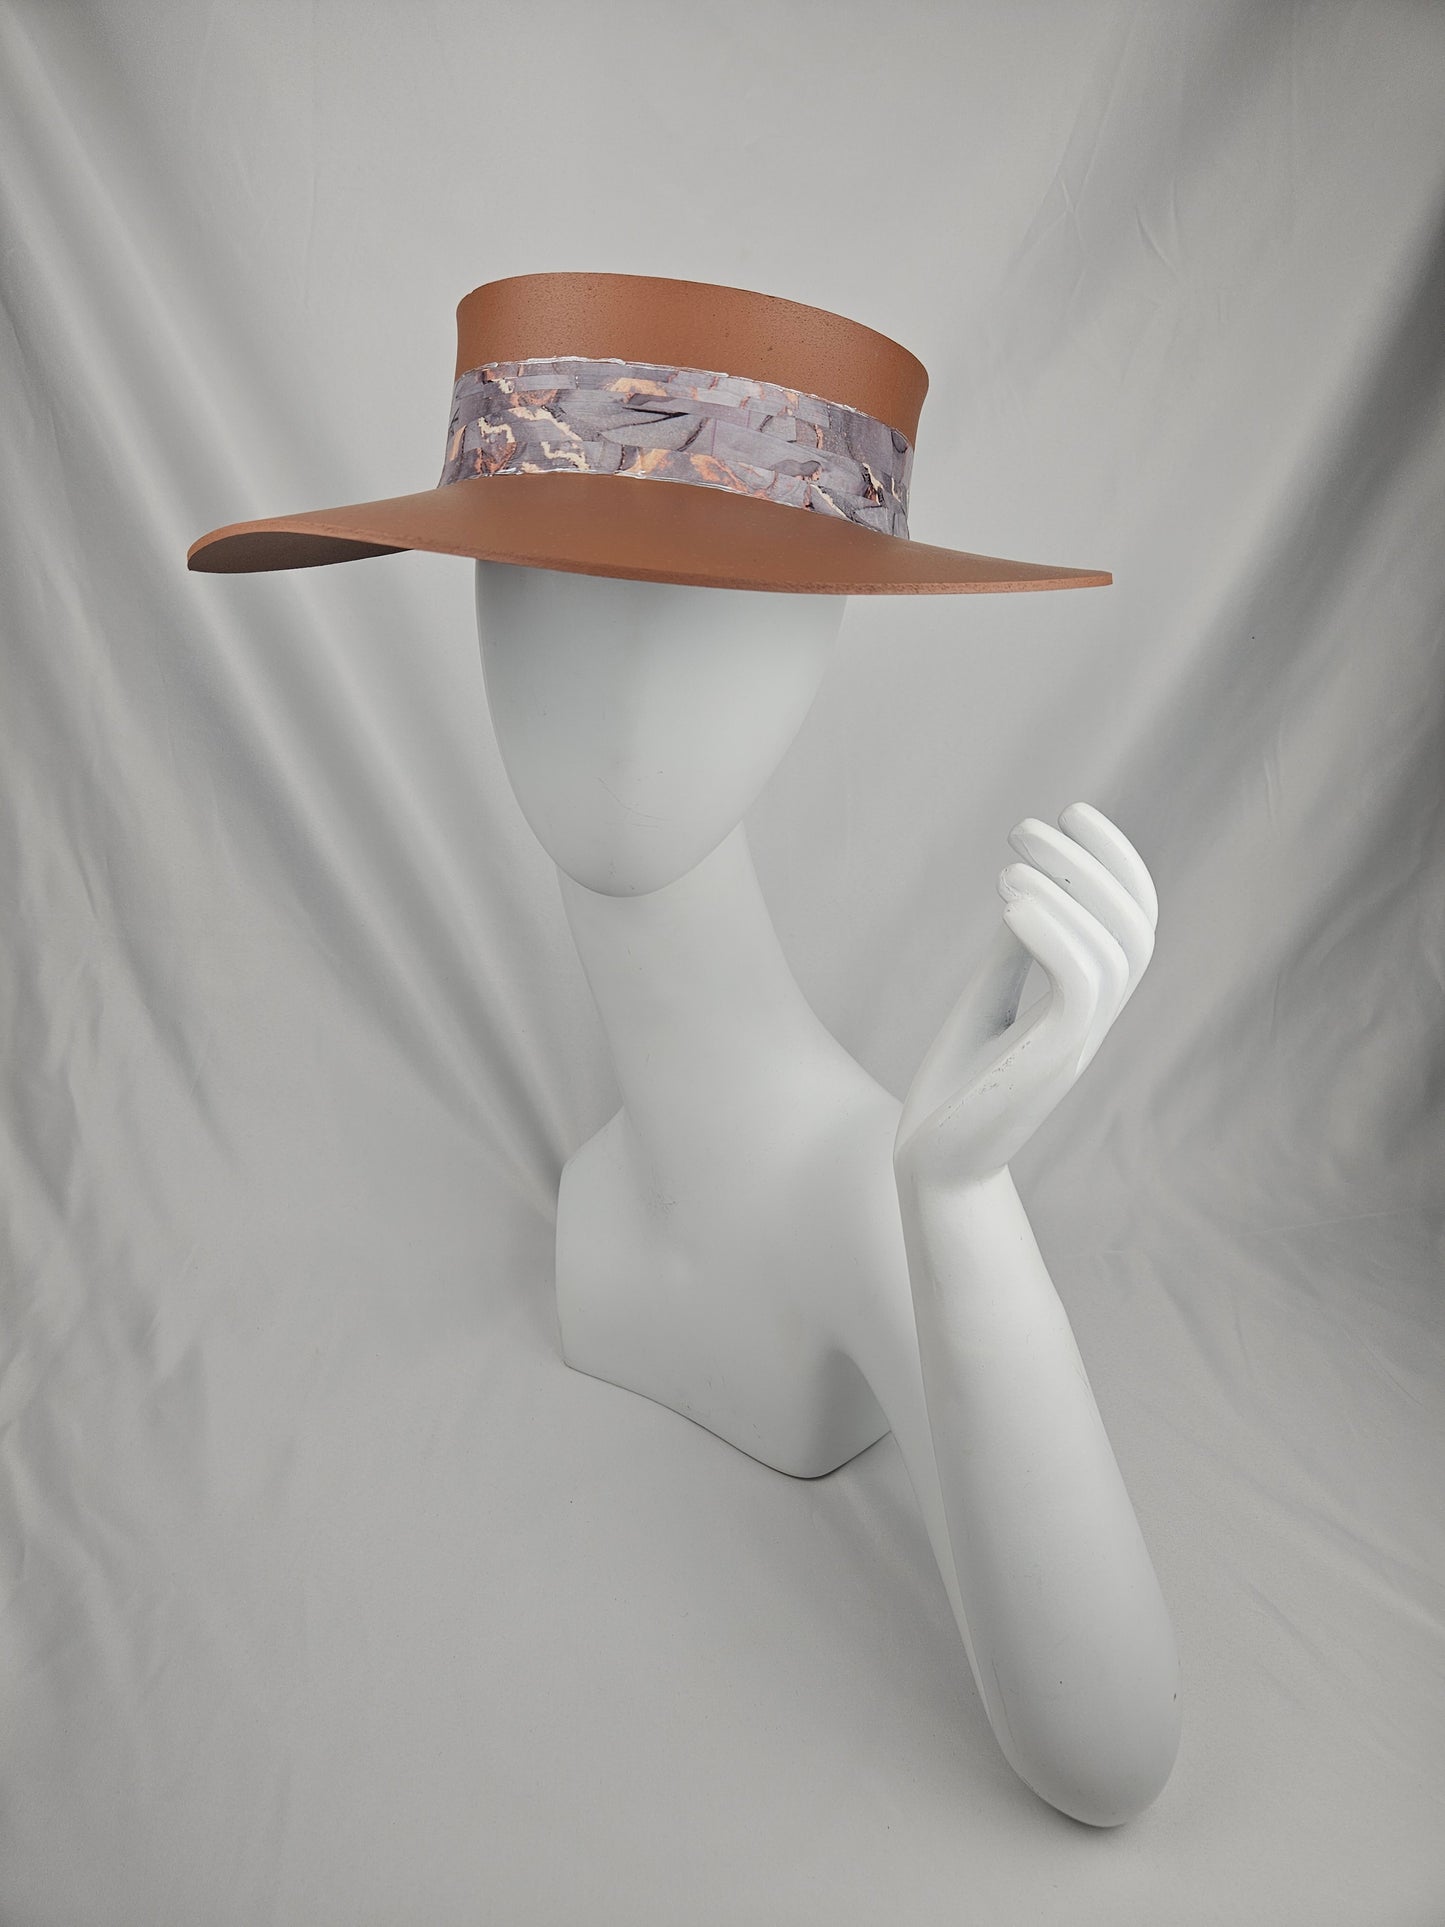 Caramel Brown Audrey Sun Visor Hat with Stylish Marbled Gray Blue Band: UV Resistant, Walks, 1950s, Brunch, Tea, Golf, Wedding, Church, No Headache, Easter, Pool, Beach, Big Brim